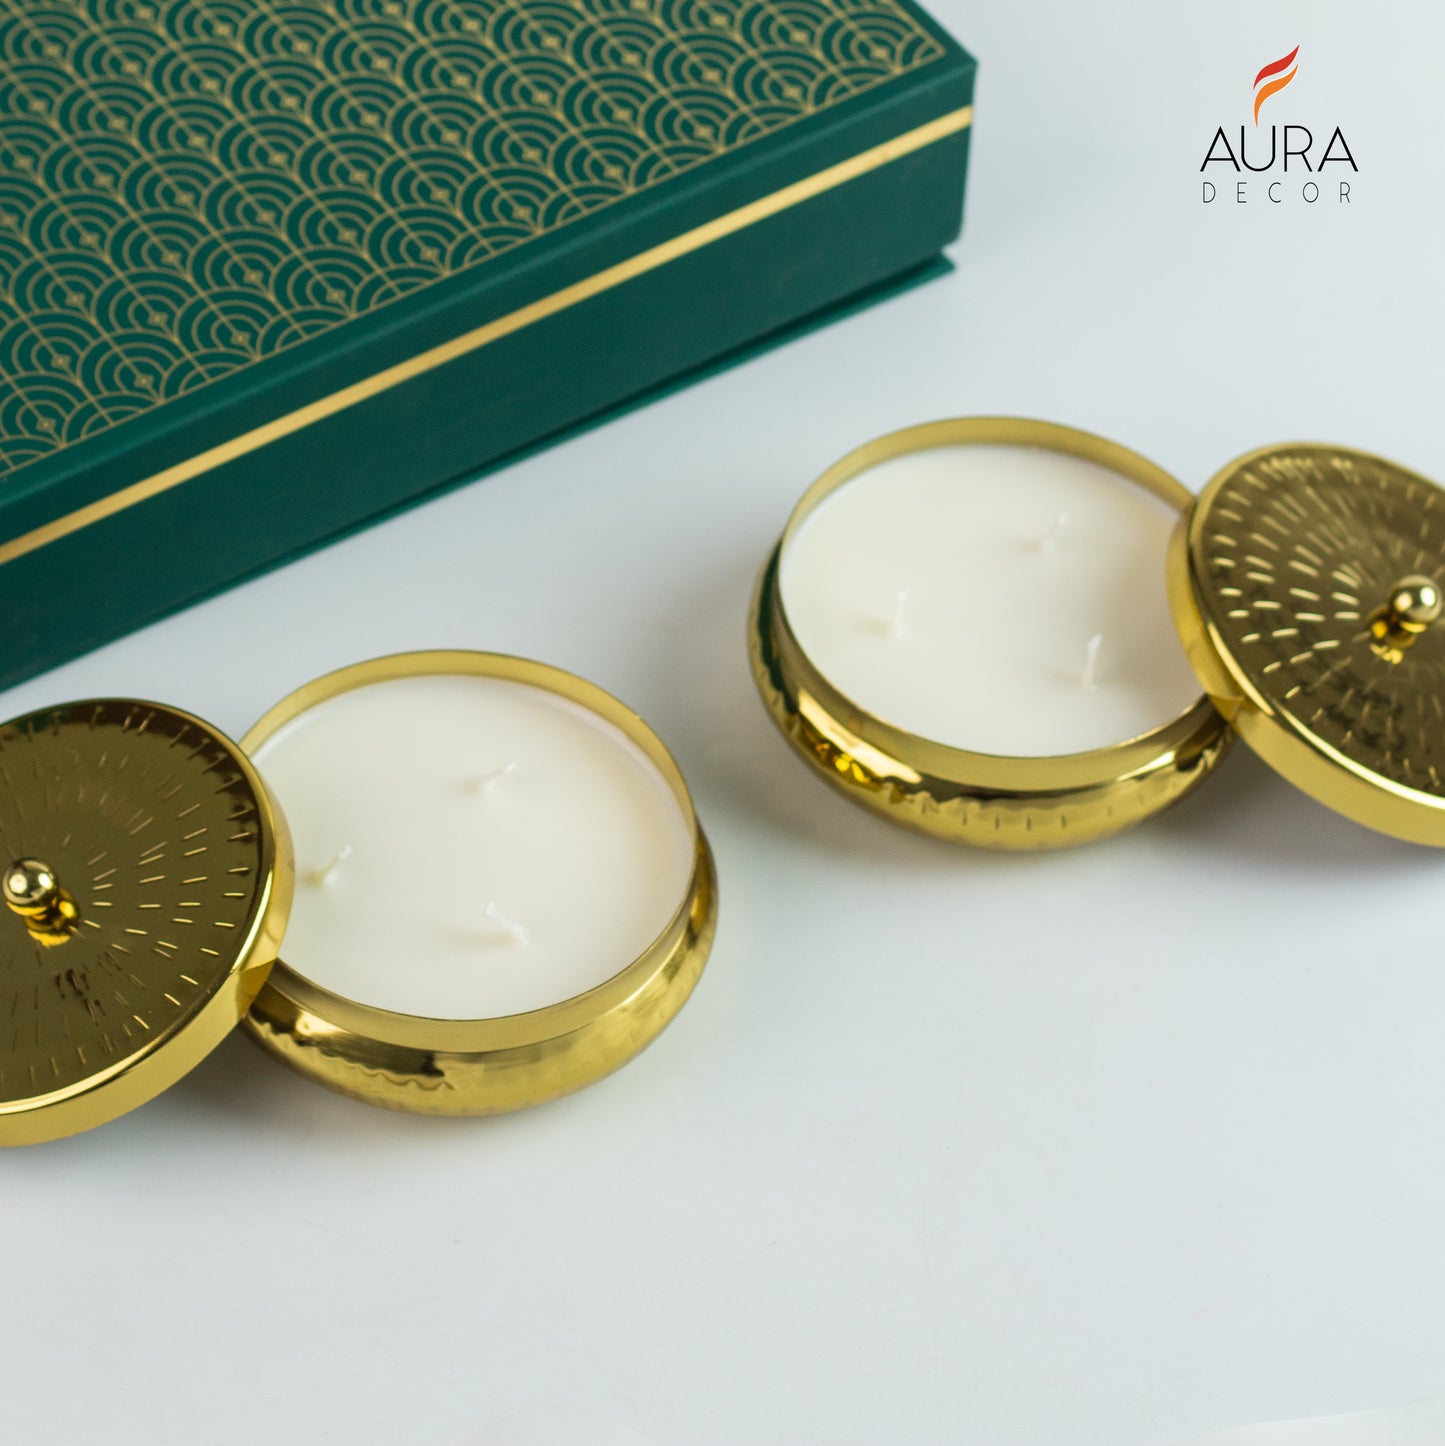 AuraDecor Set of 2 Fragrance Urli Candles in a Gift Pack